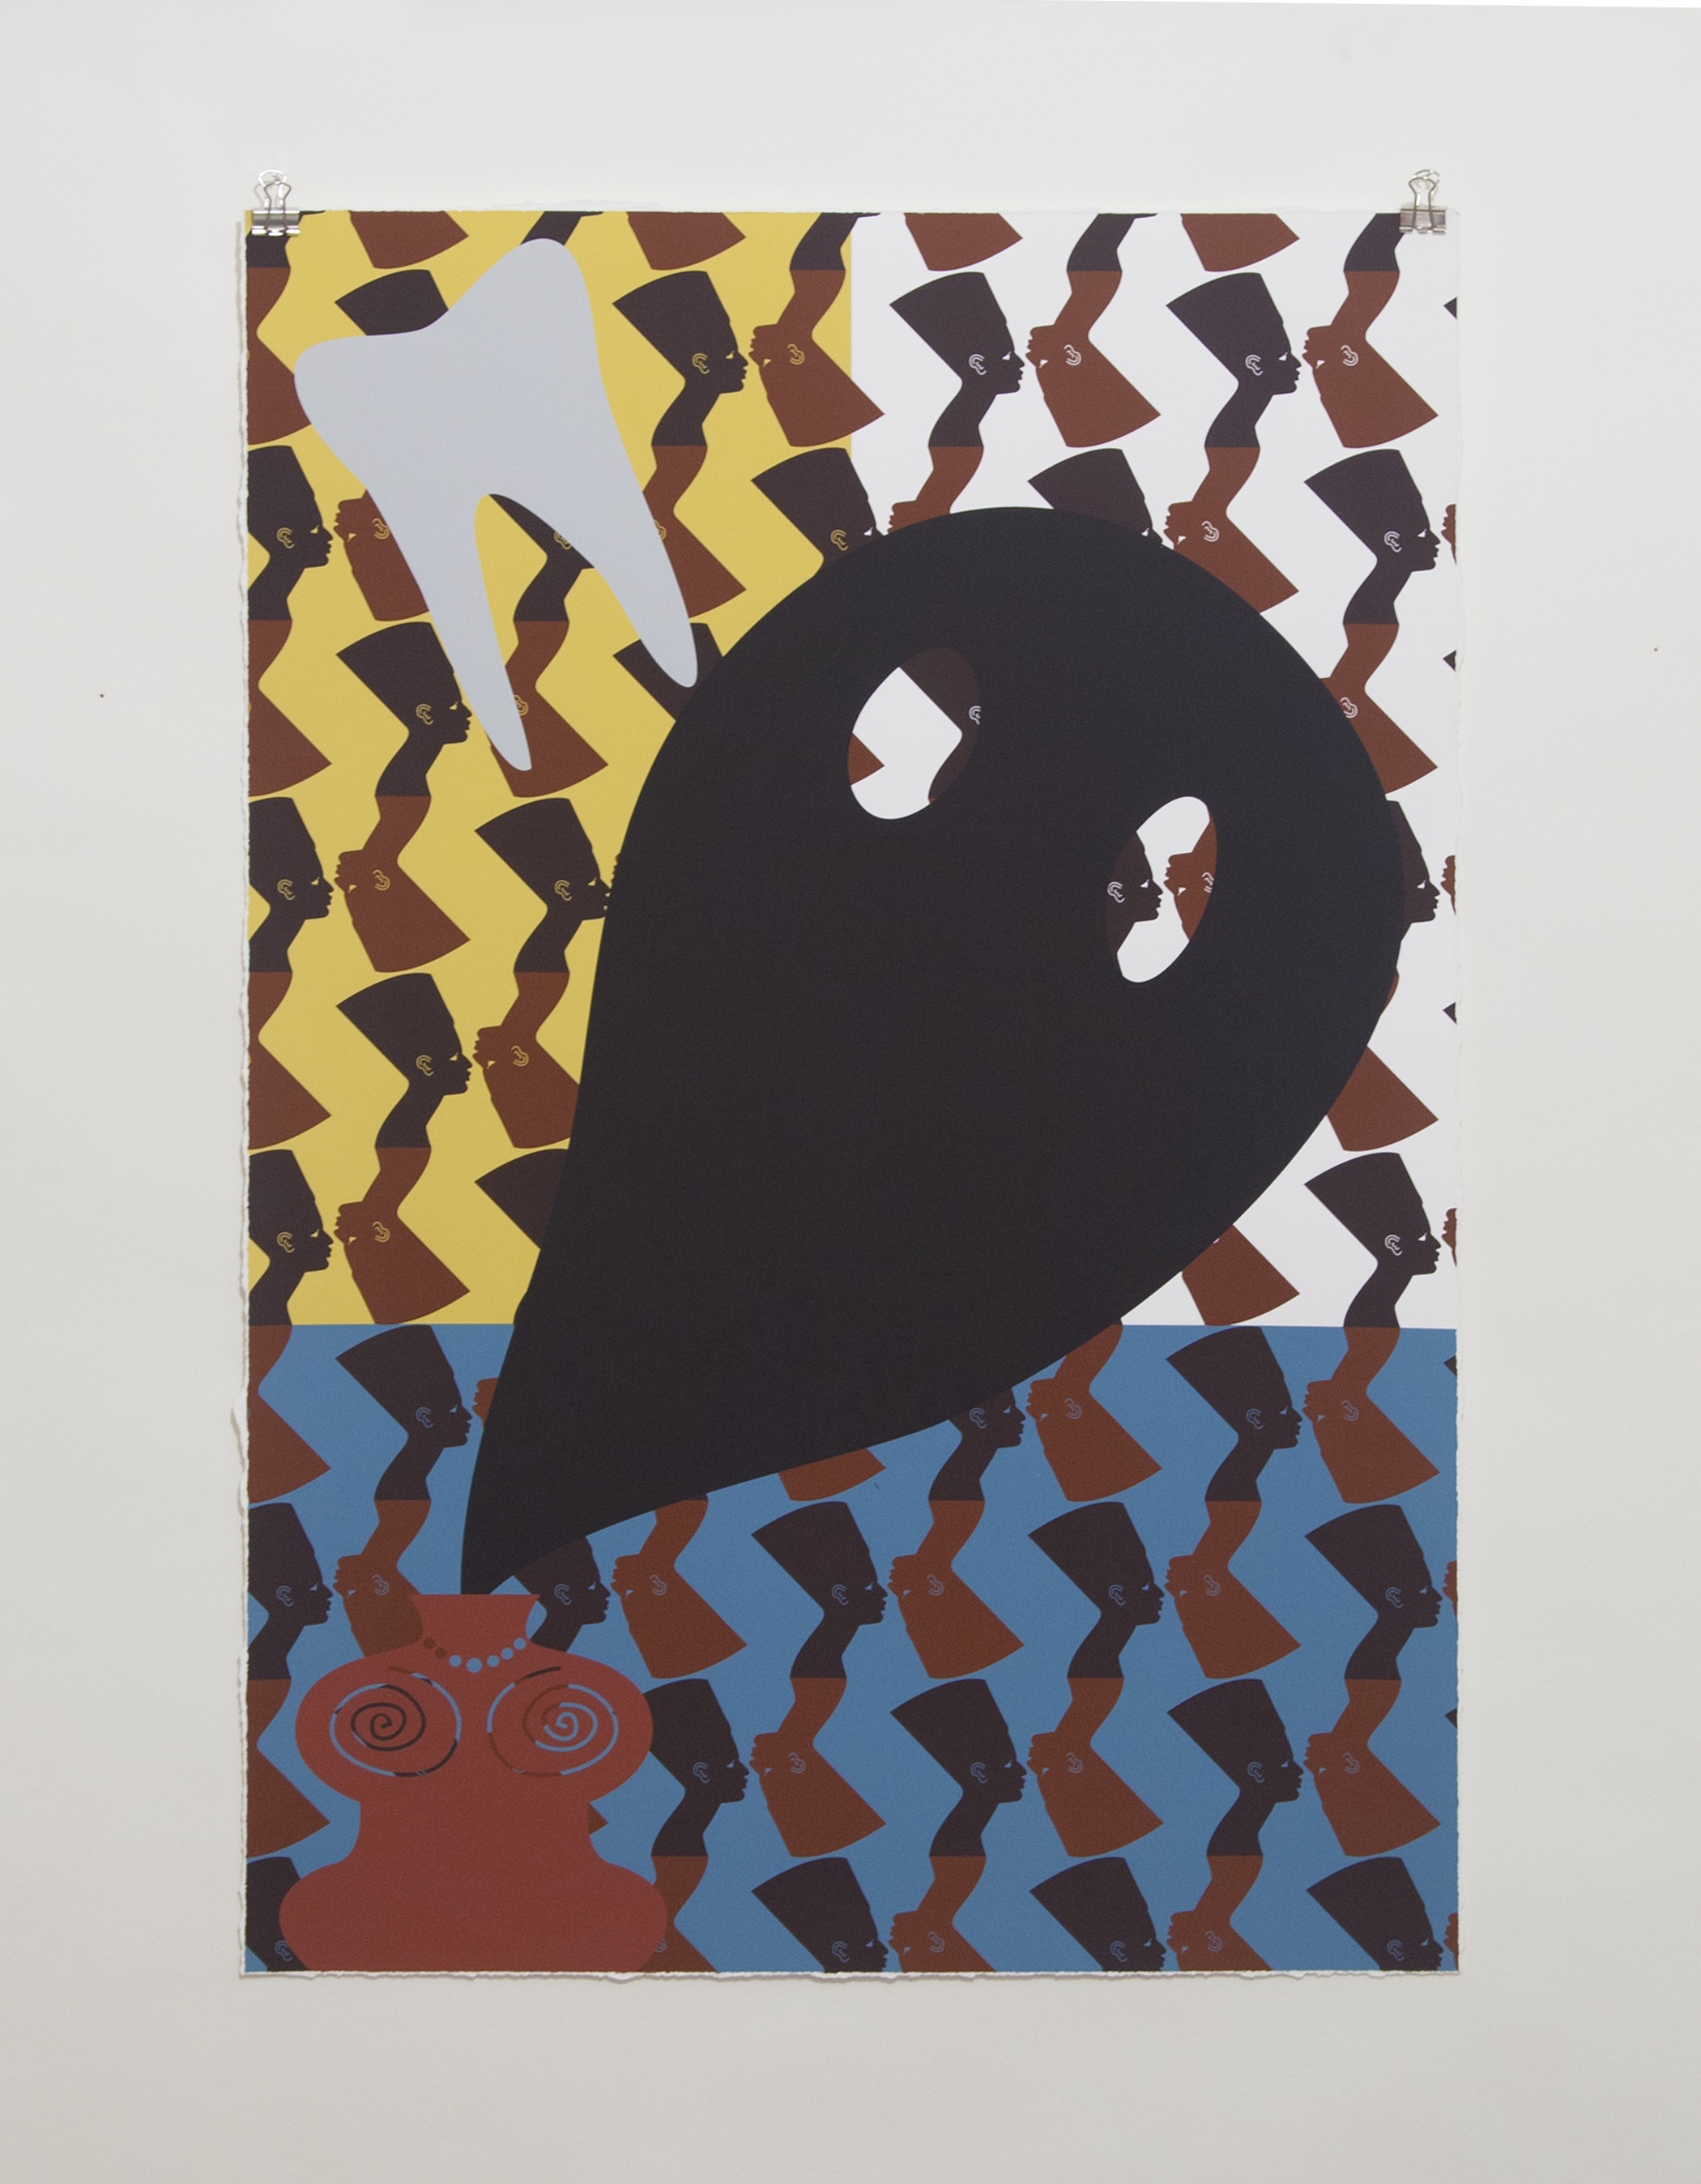   Genie , 2015 Digital Print on Cold Press Paper 30 x 20 inches 